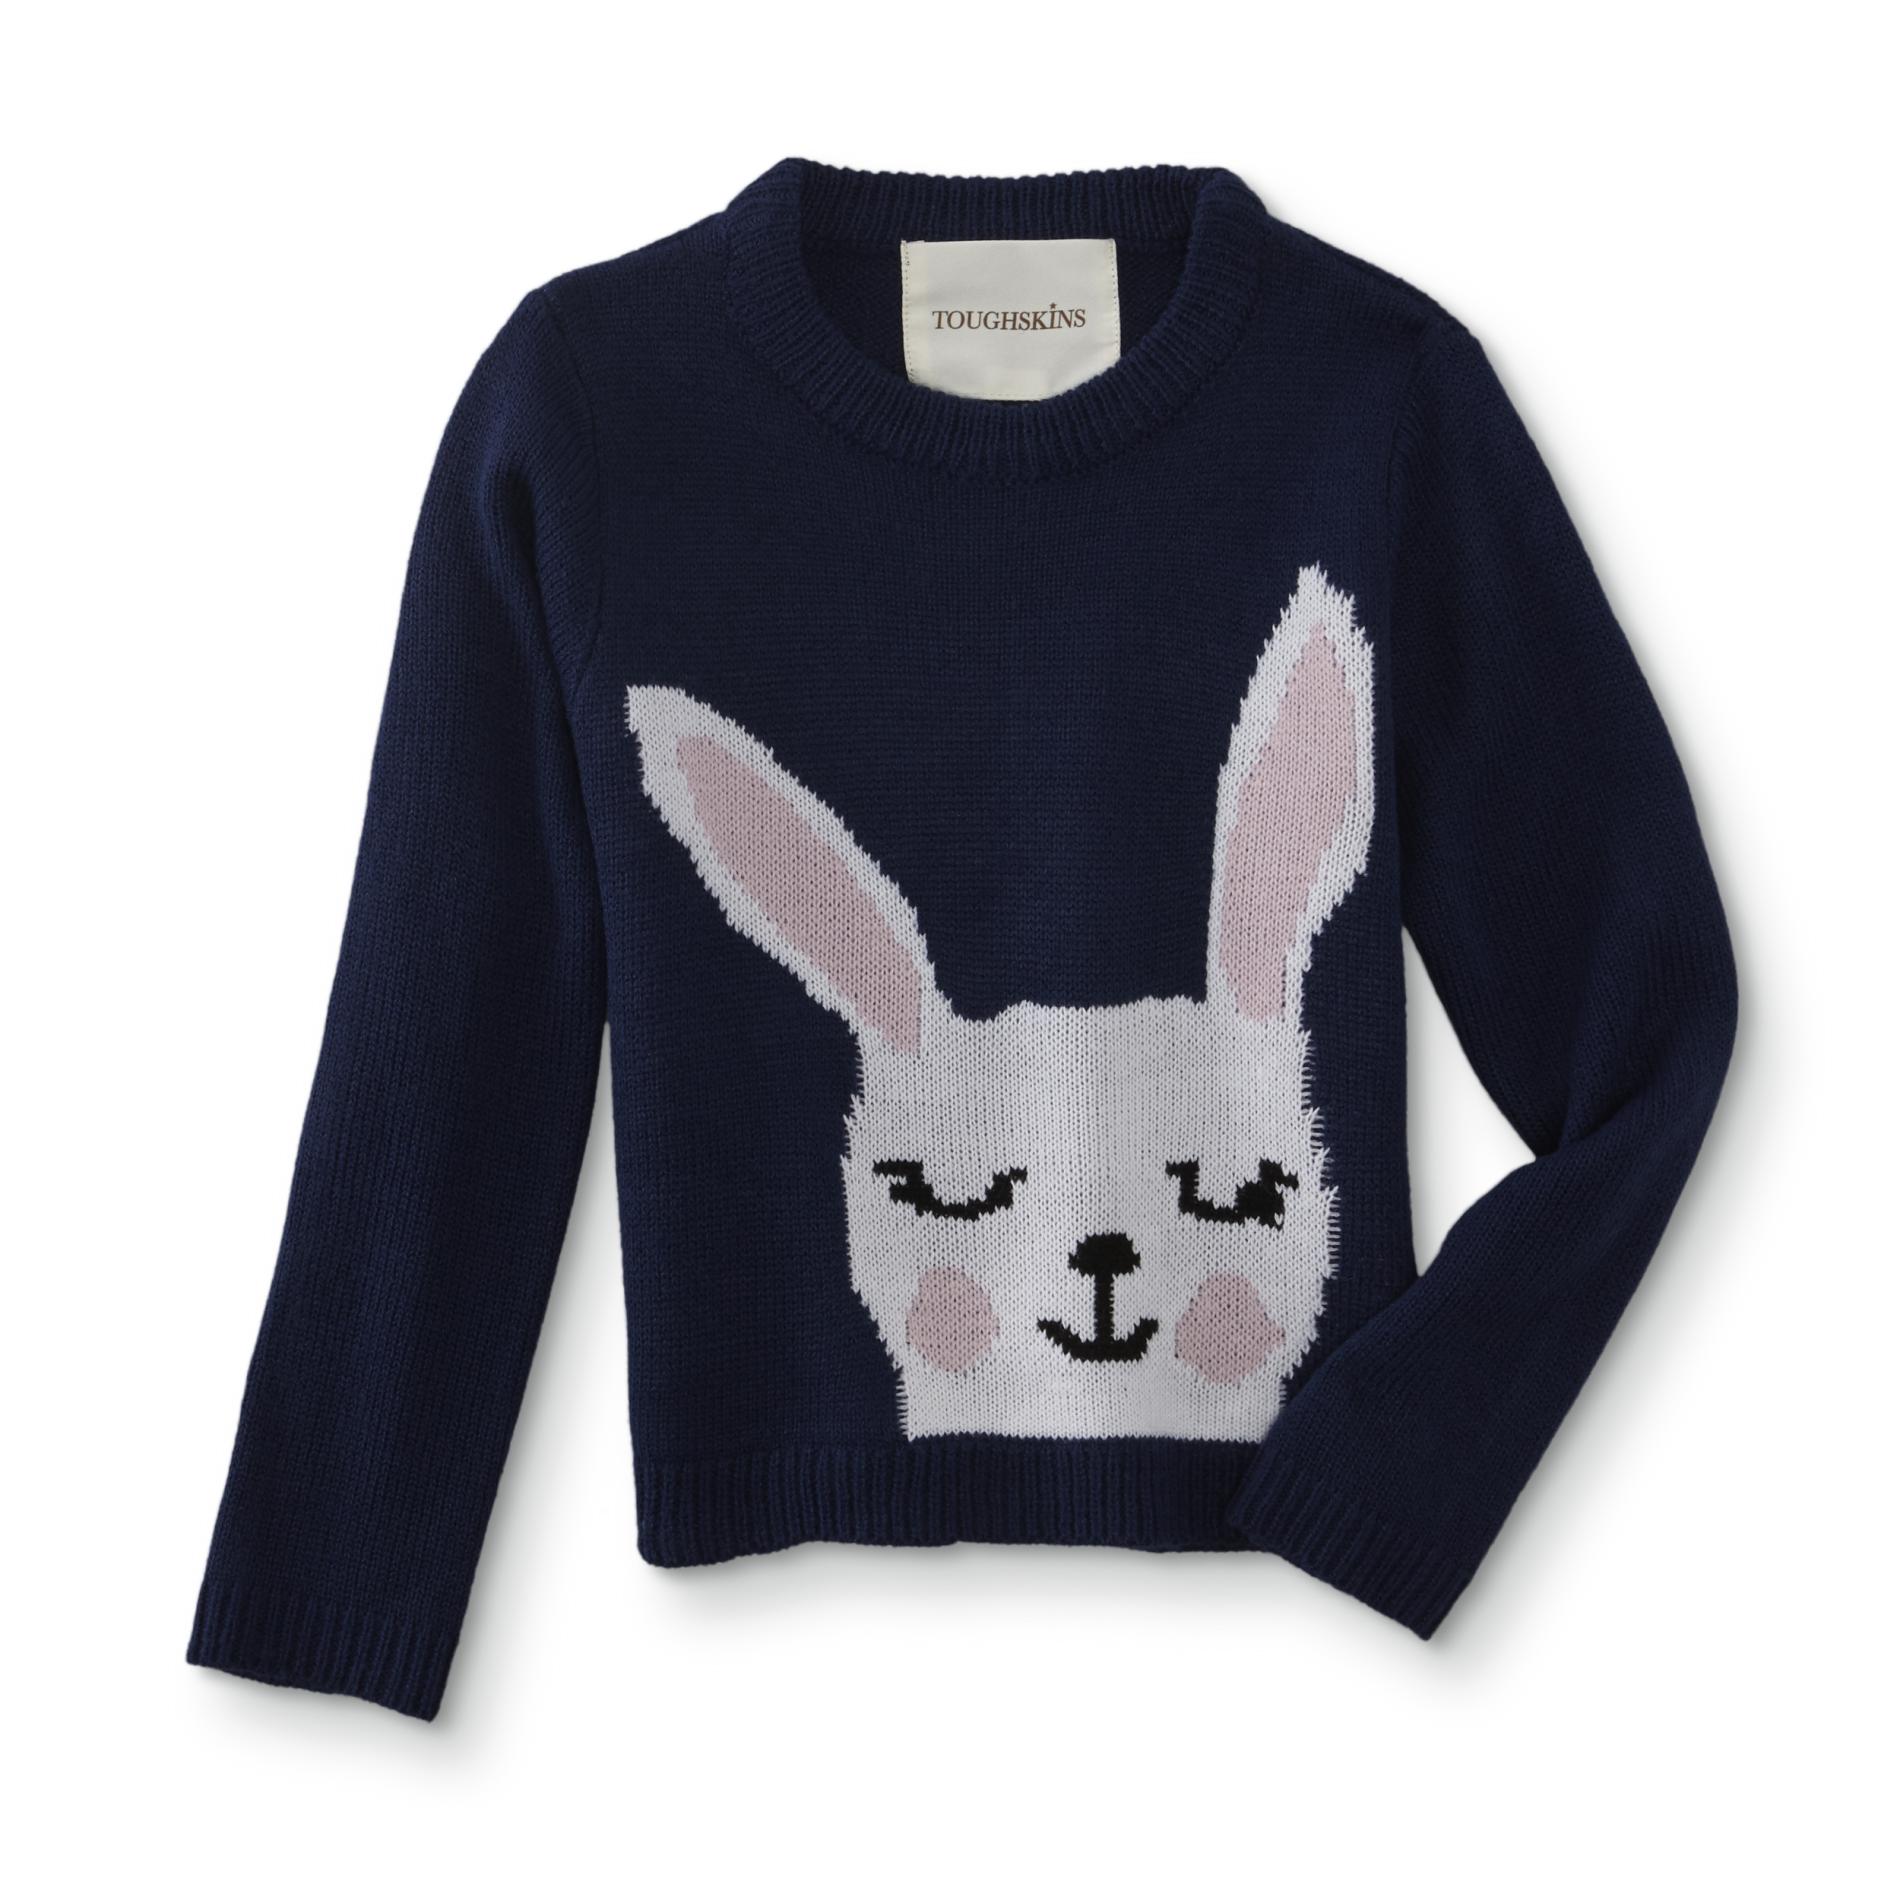 Toughskins Girls' Sweater - Bunny